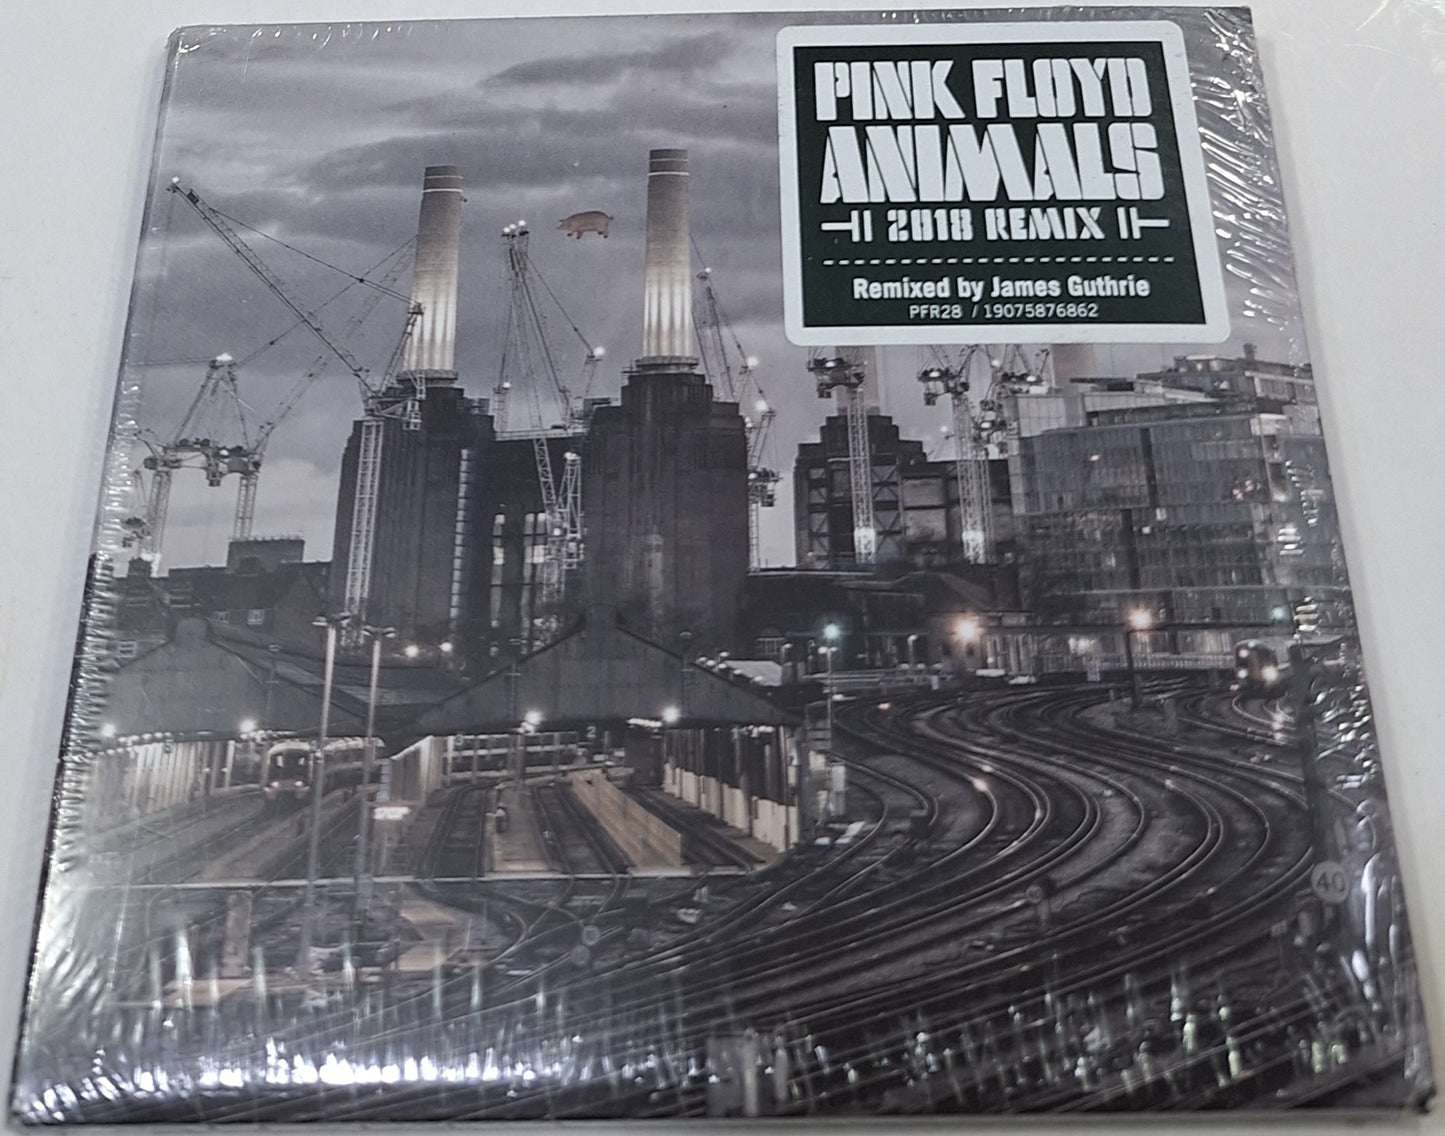 PINK FLOYD - ANIMALS  CD